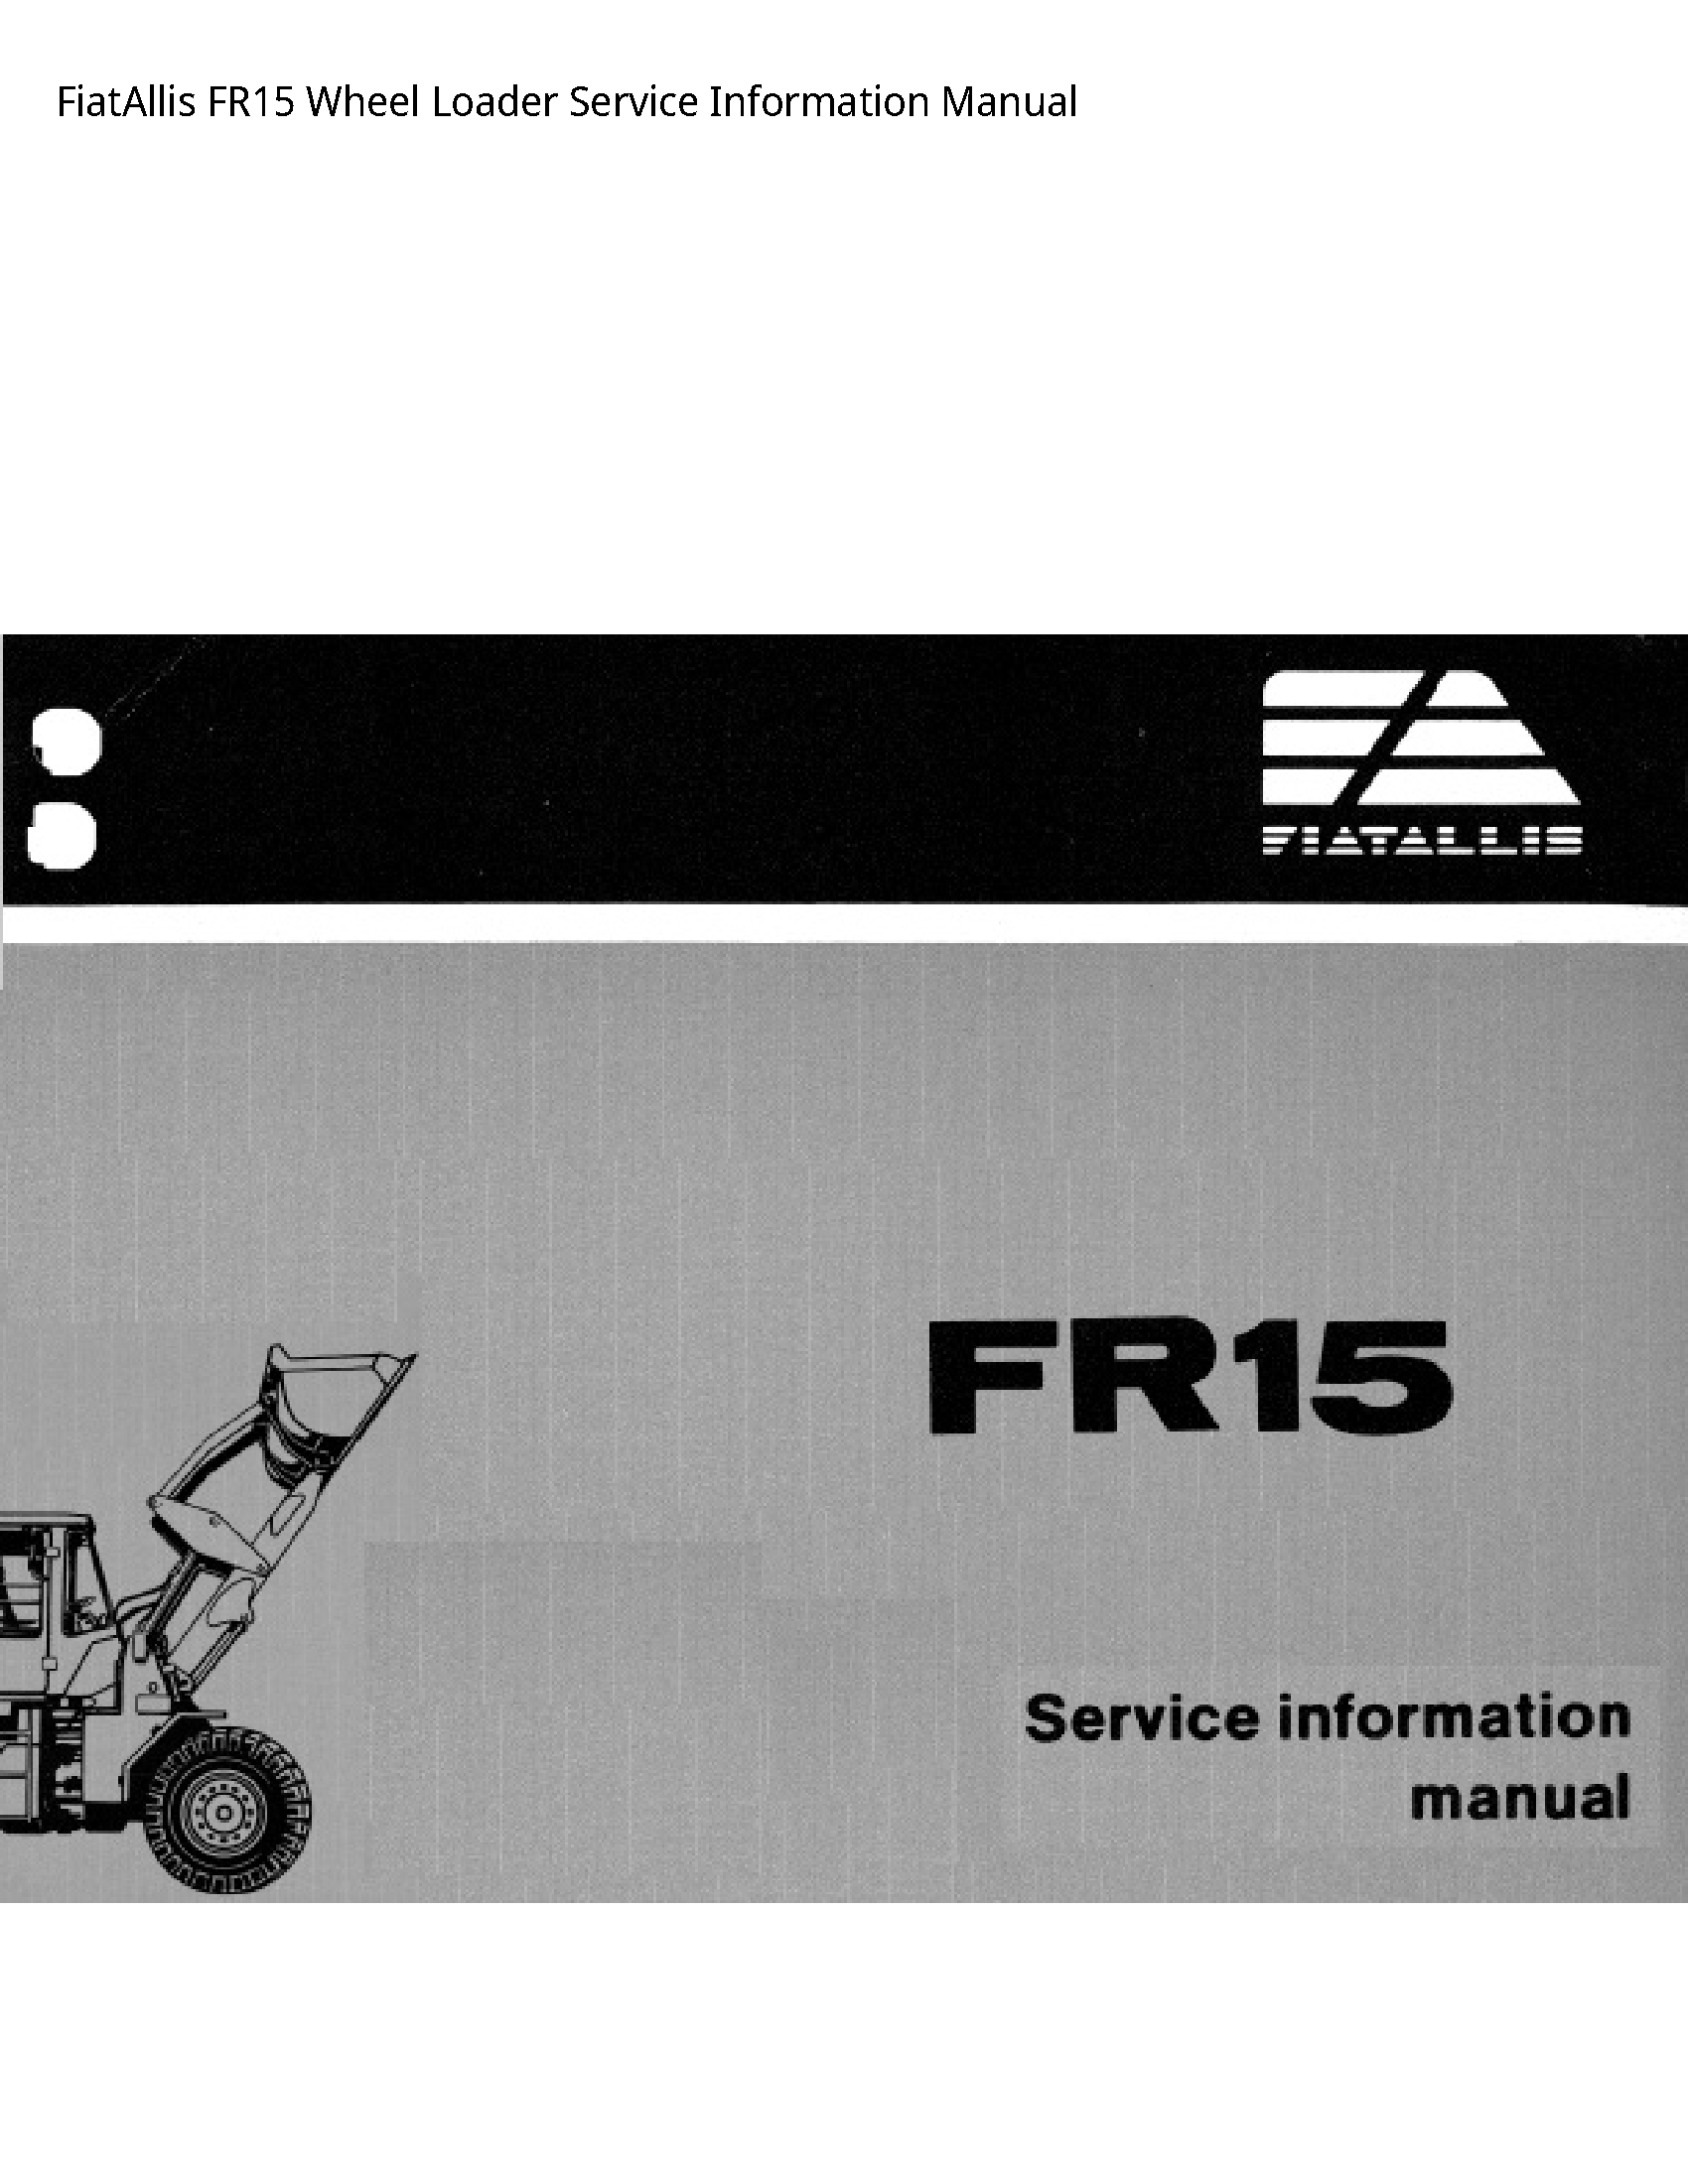 Fiatallis FR15 Wheel Loader Service Information manual